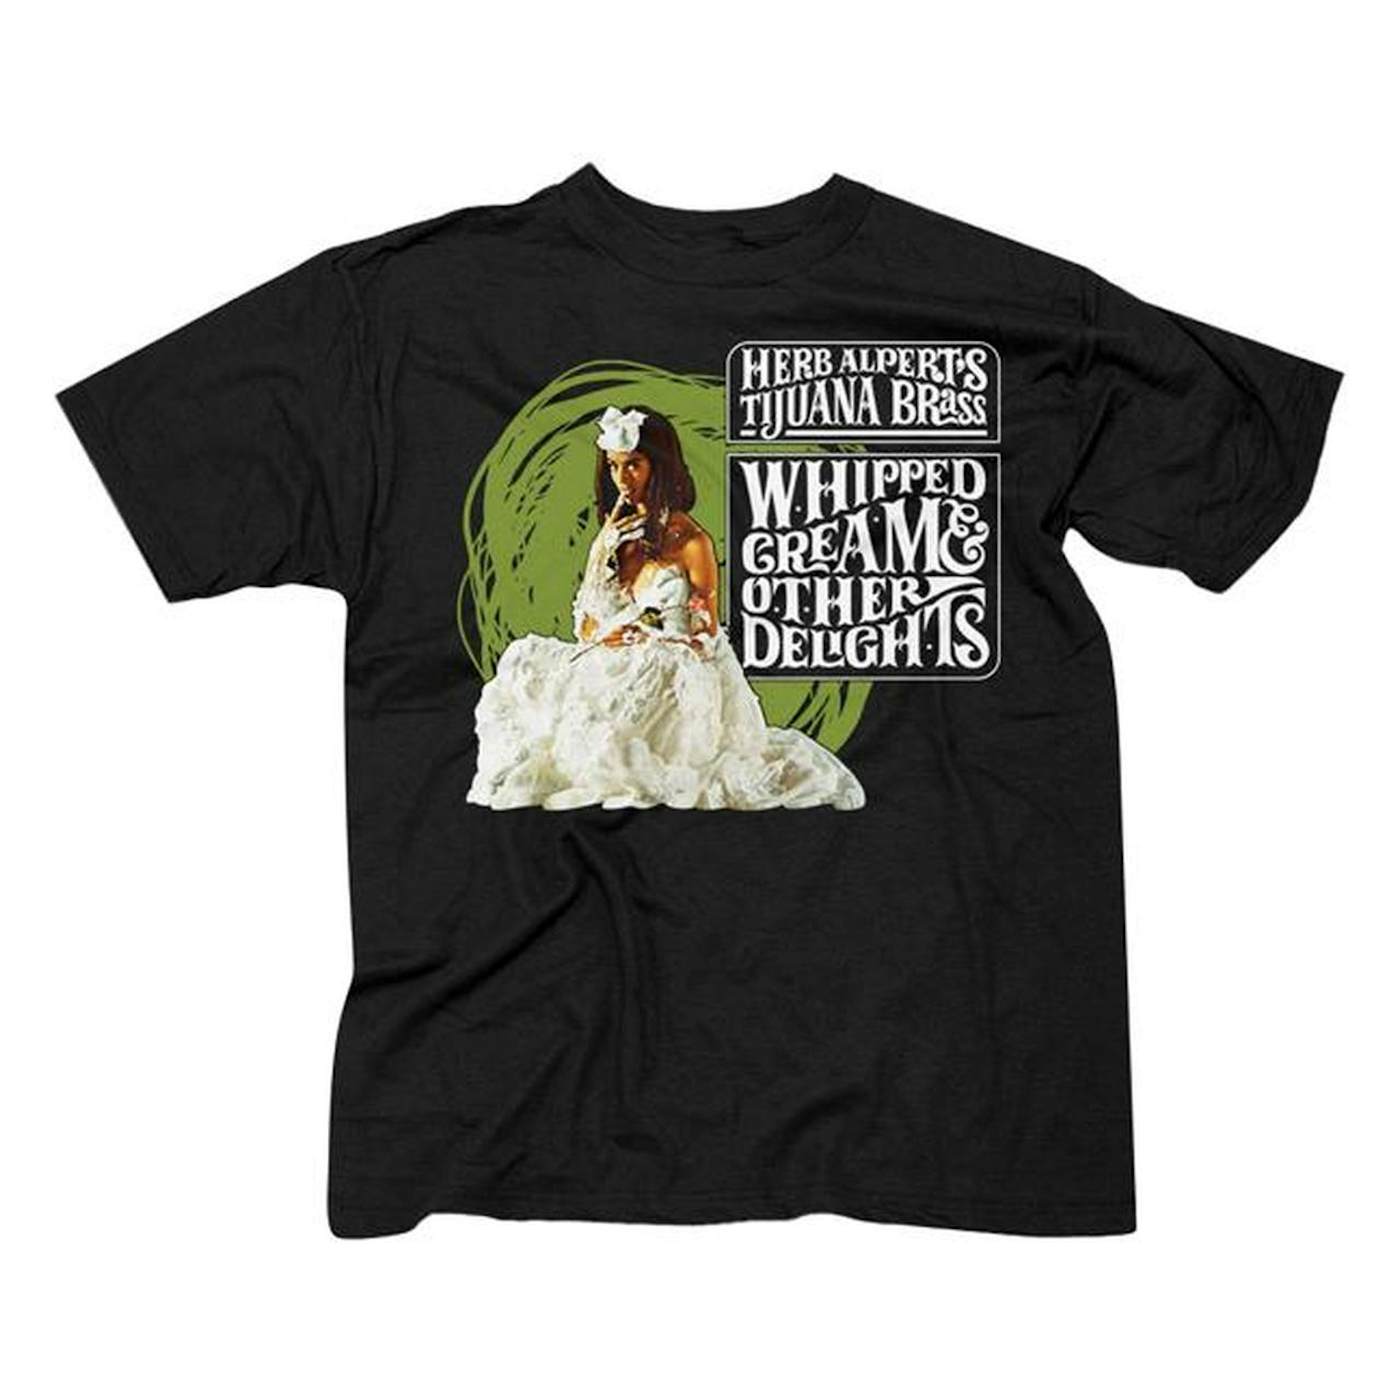 Herb Alpert "Whipped Cream & Other Delights" black t-shirt